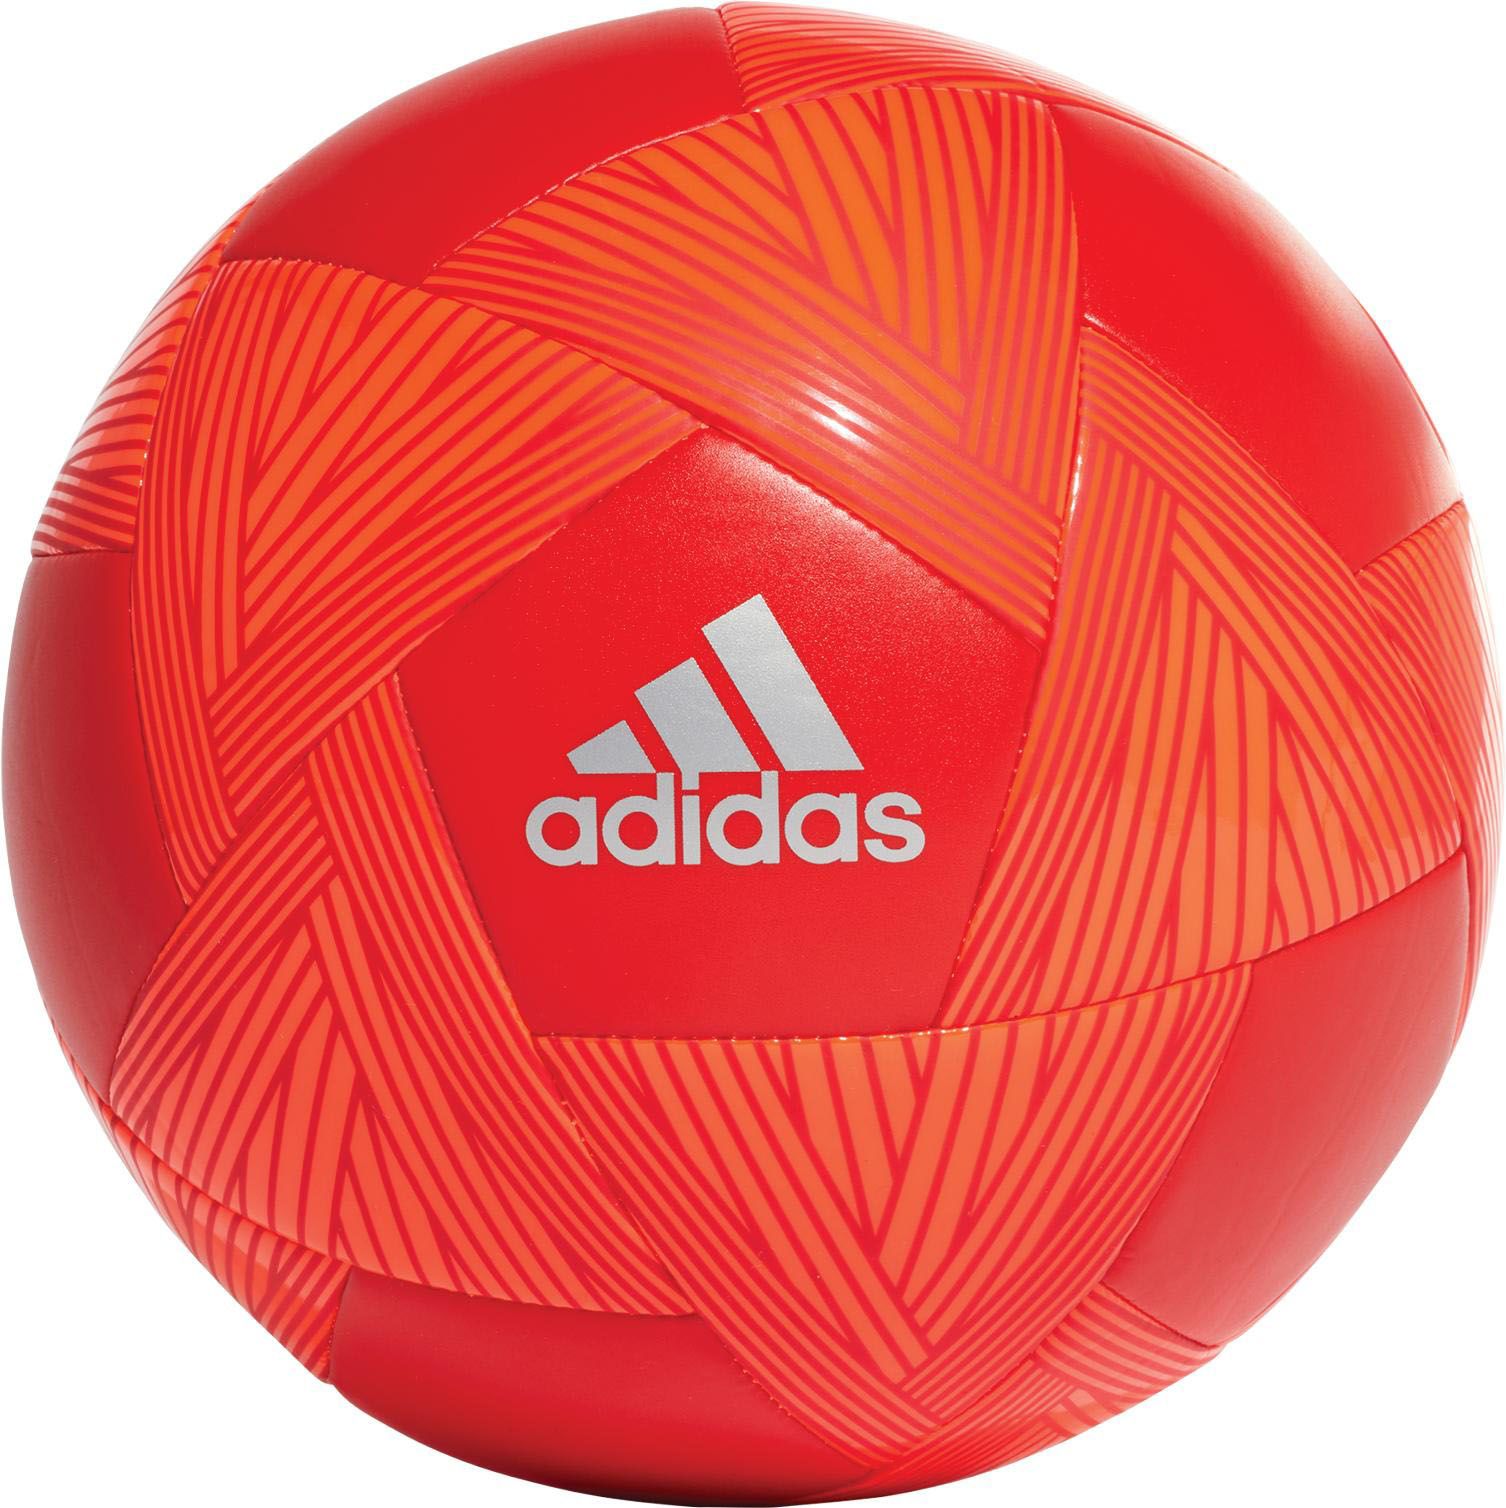 adidas Nemeziz Capitano Soccer Ball 